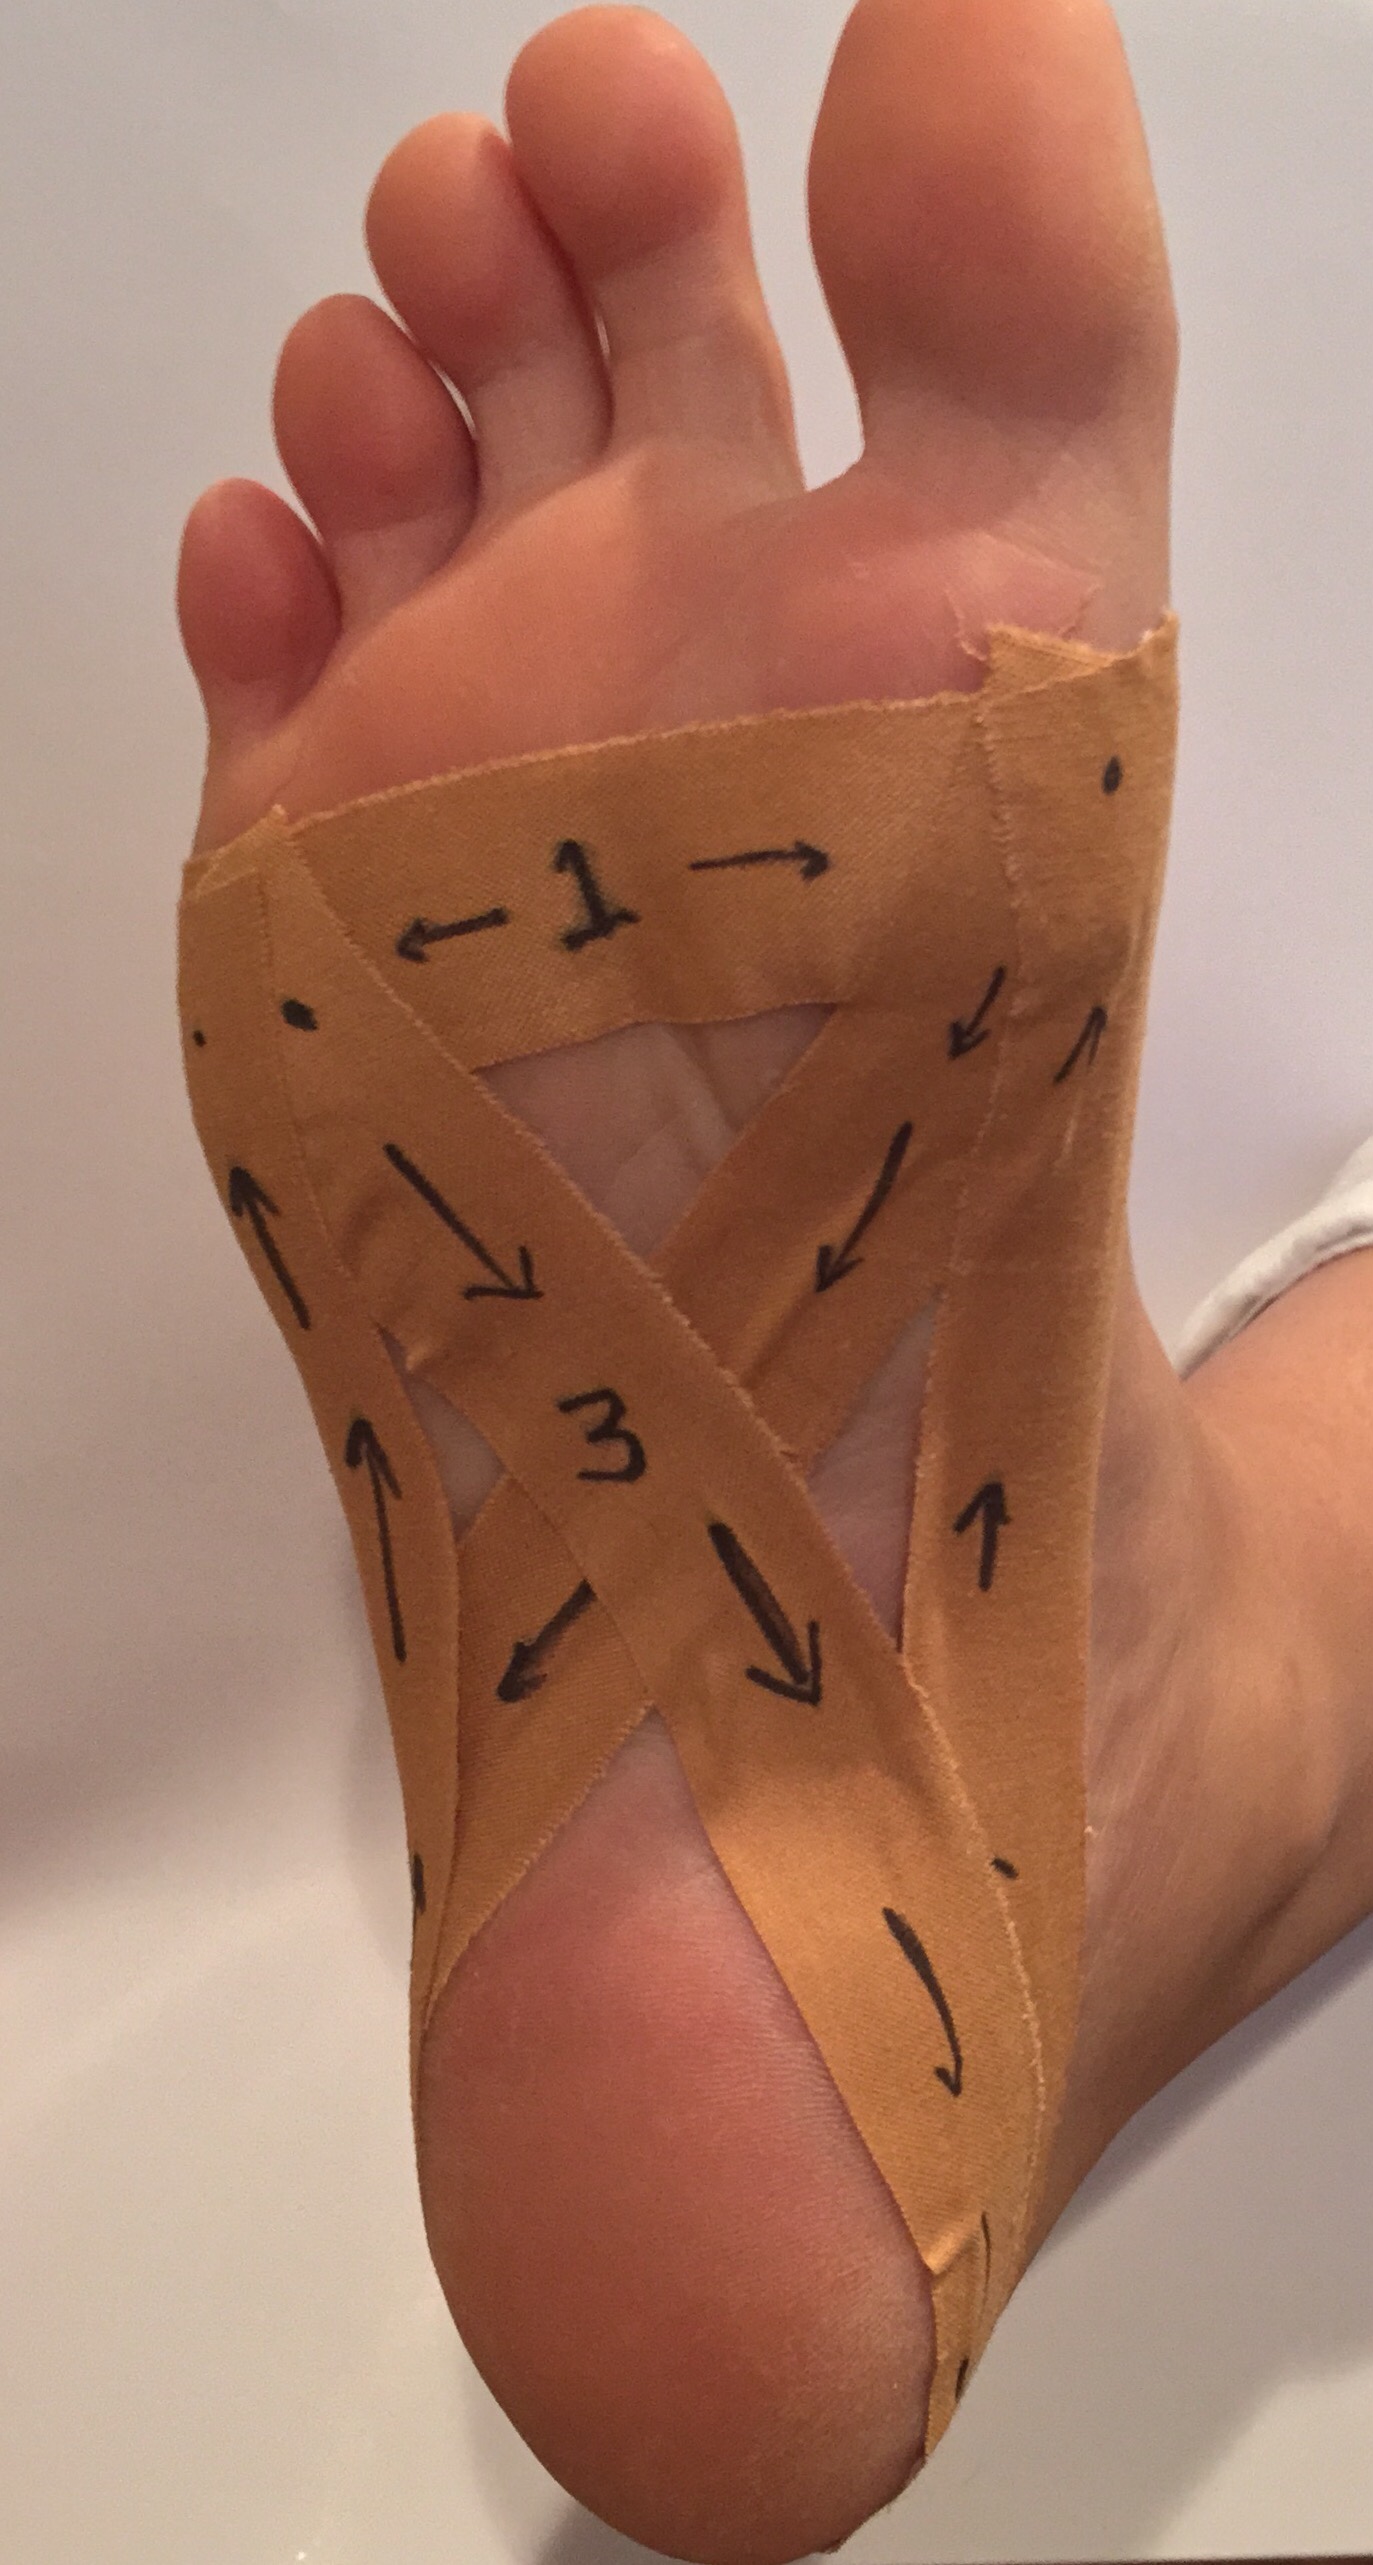 Plantar Fasciitis Treatment: How to Heal Heel Pain